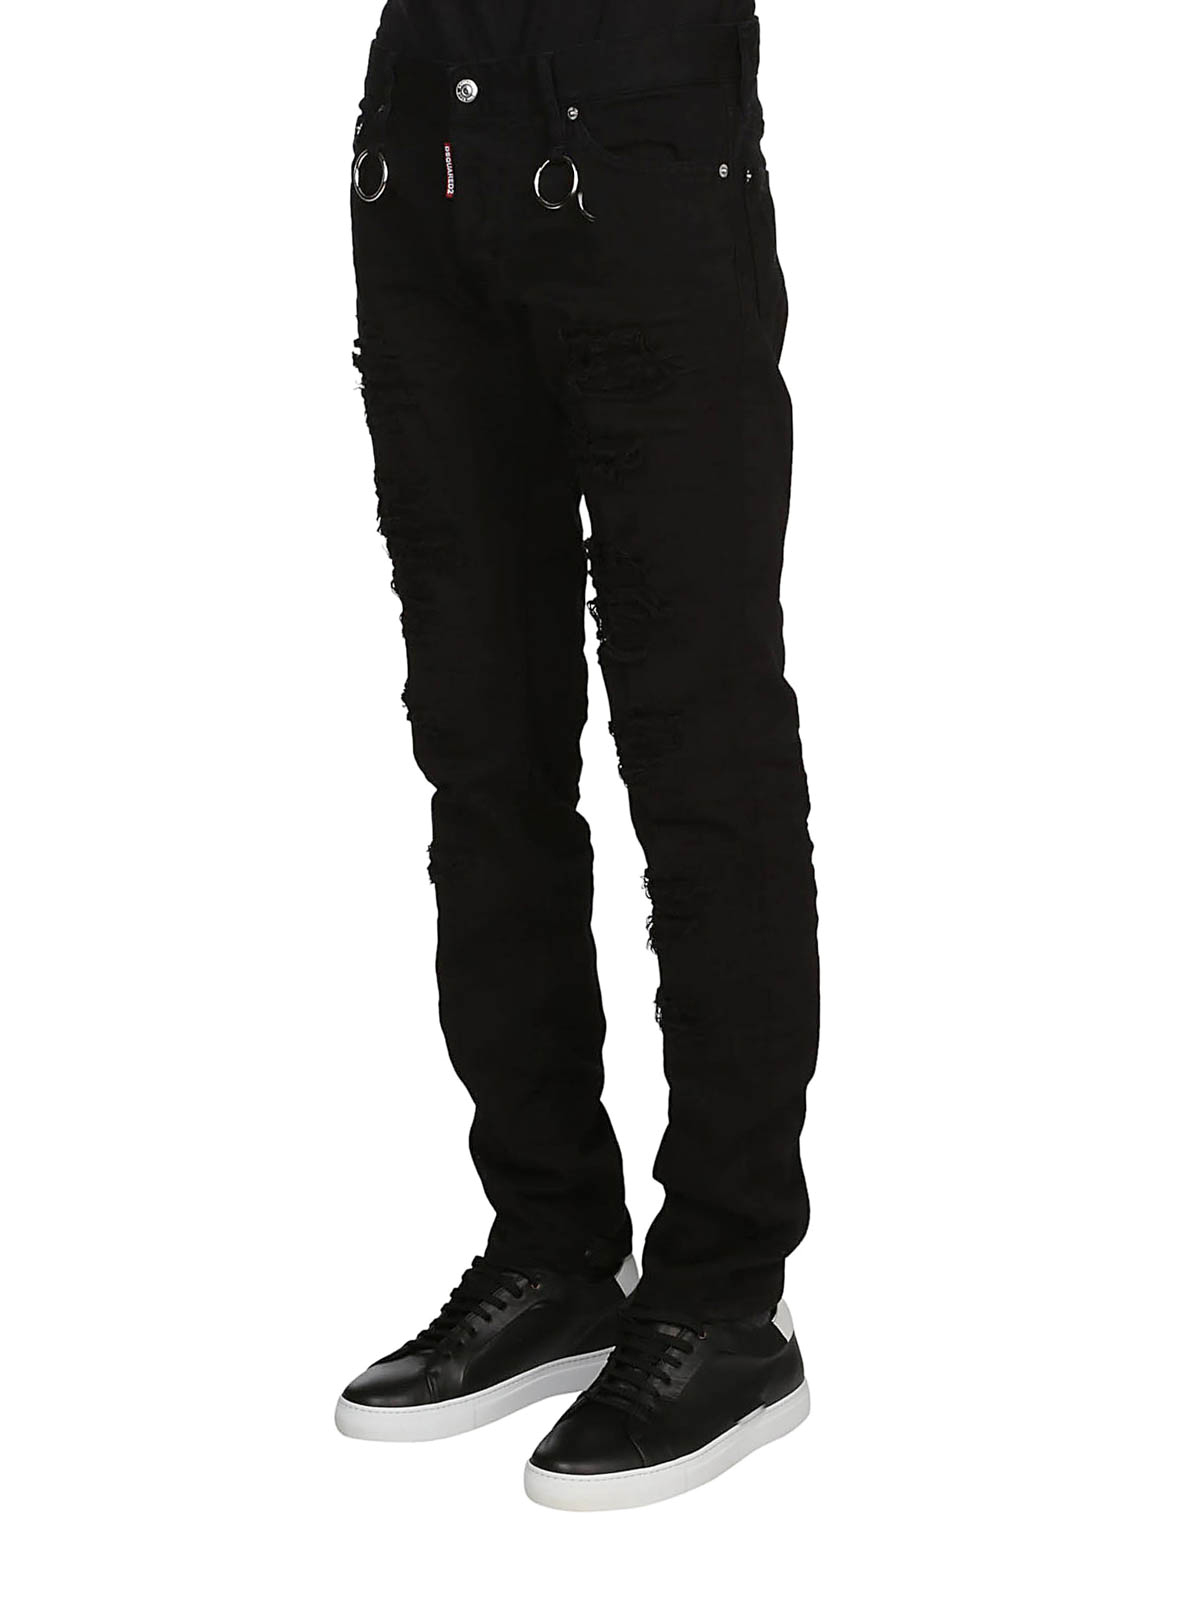 solid black skinny jeans